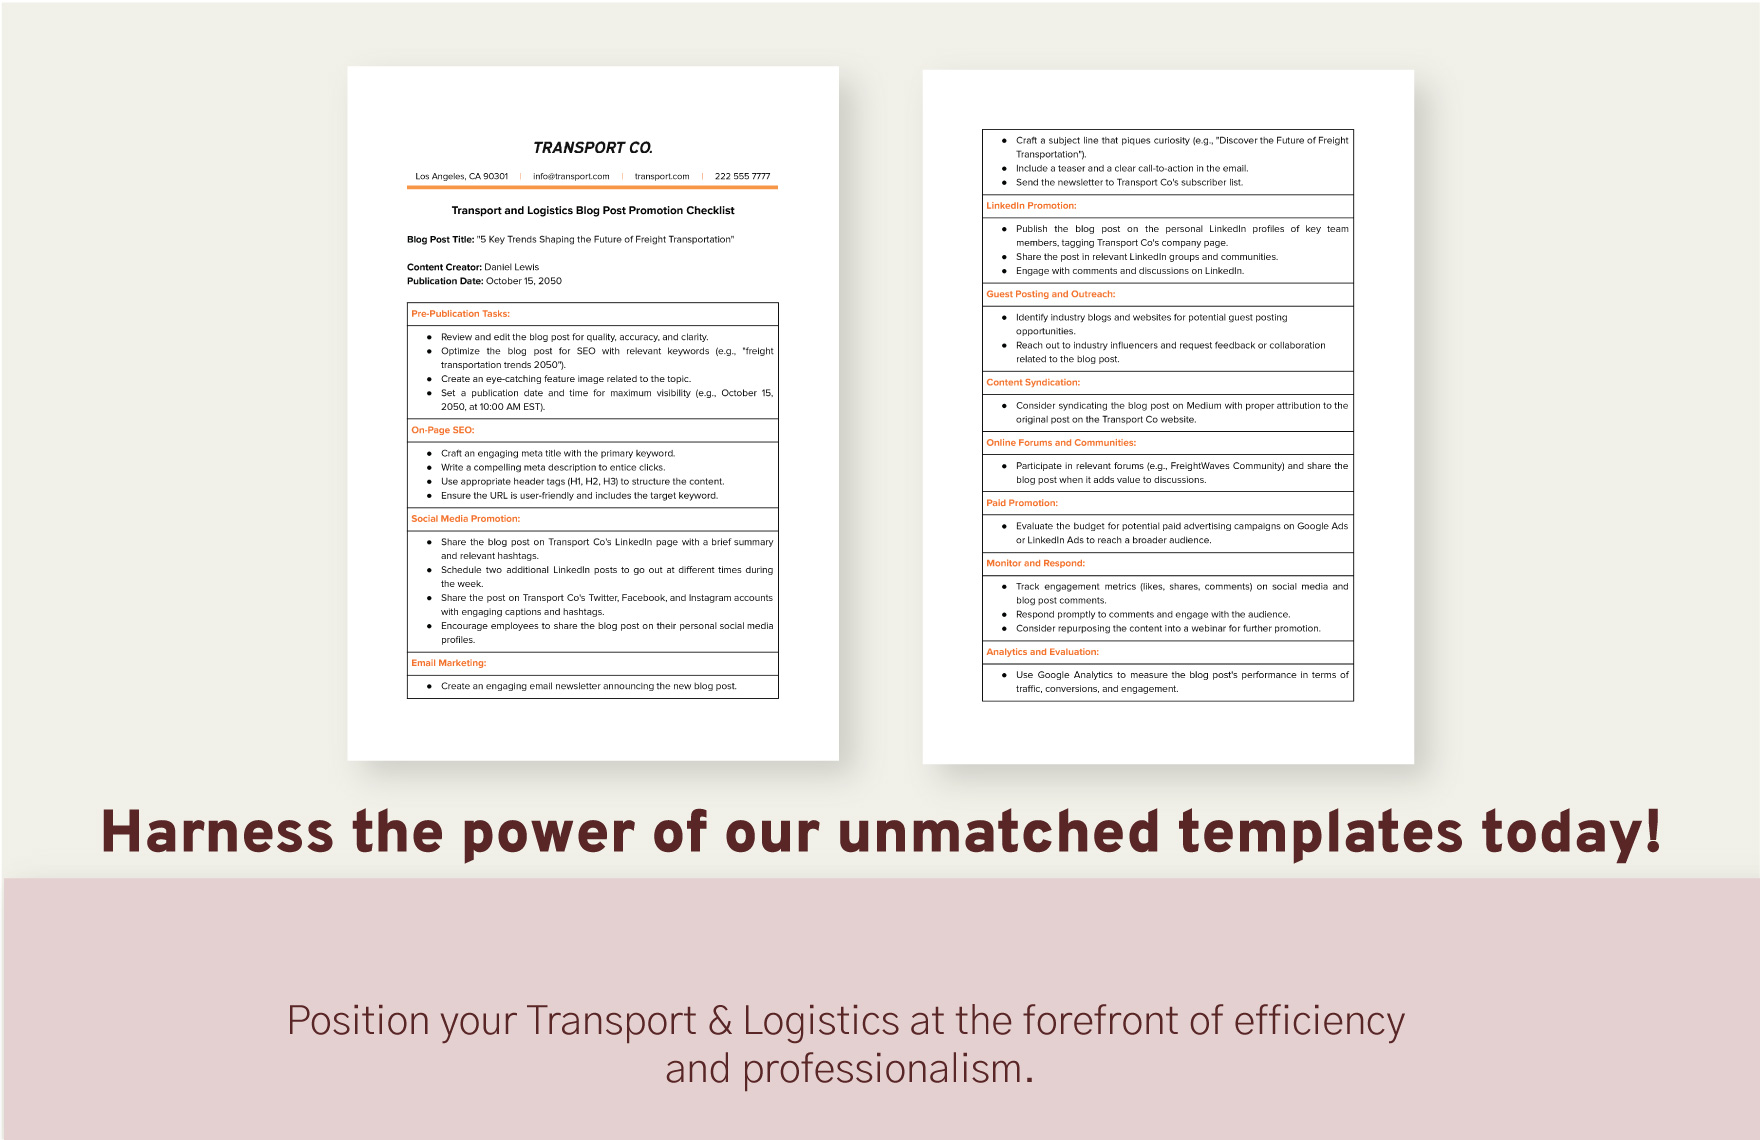 Transport and Logistics Blog Post Promotion Checklist Template